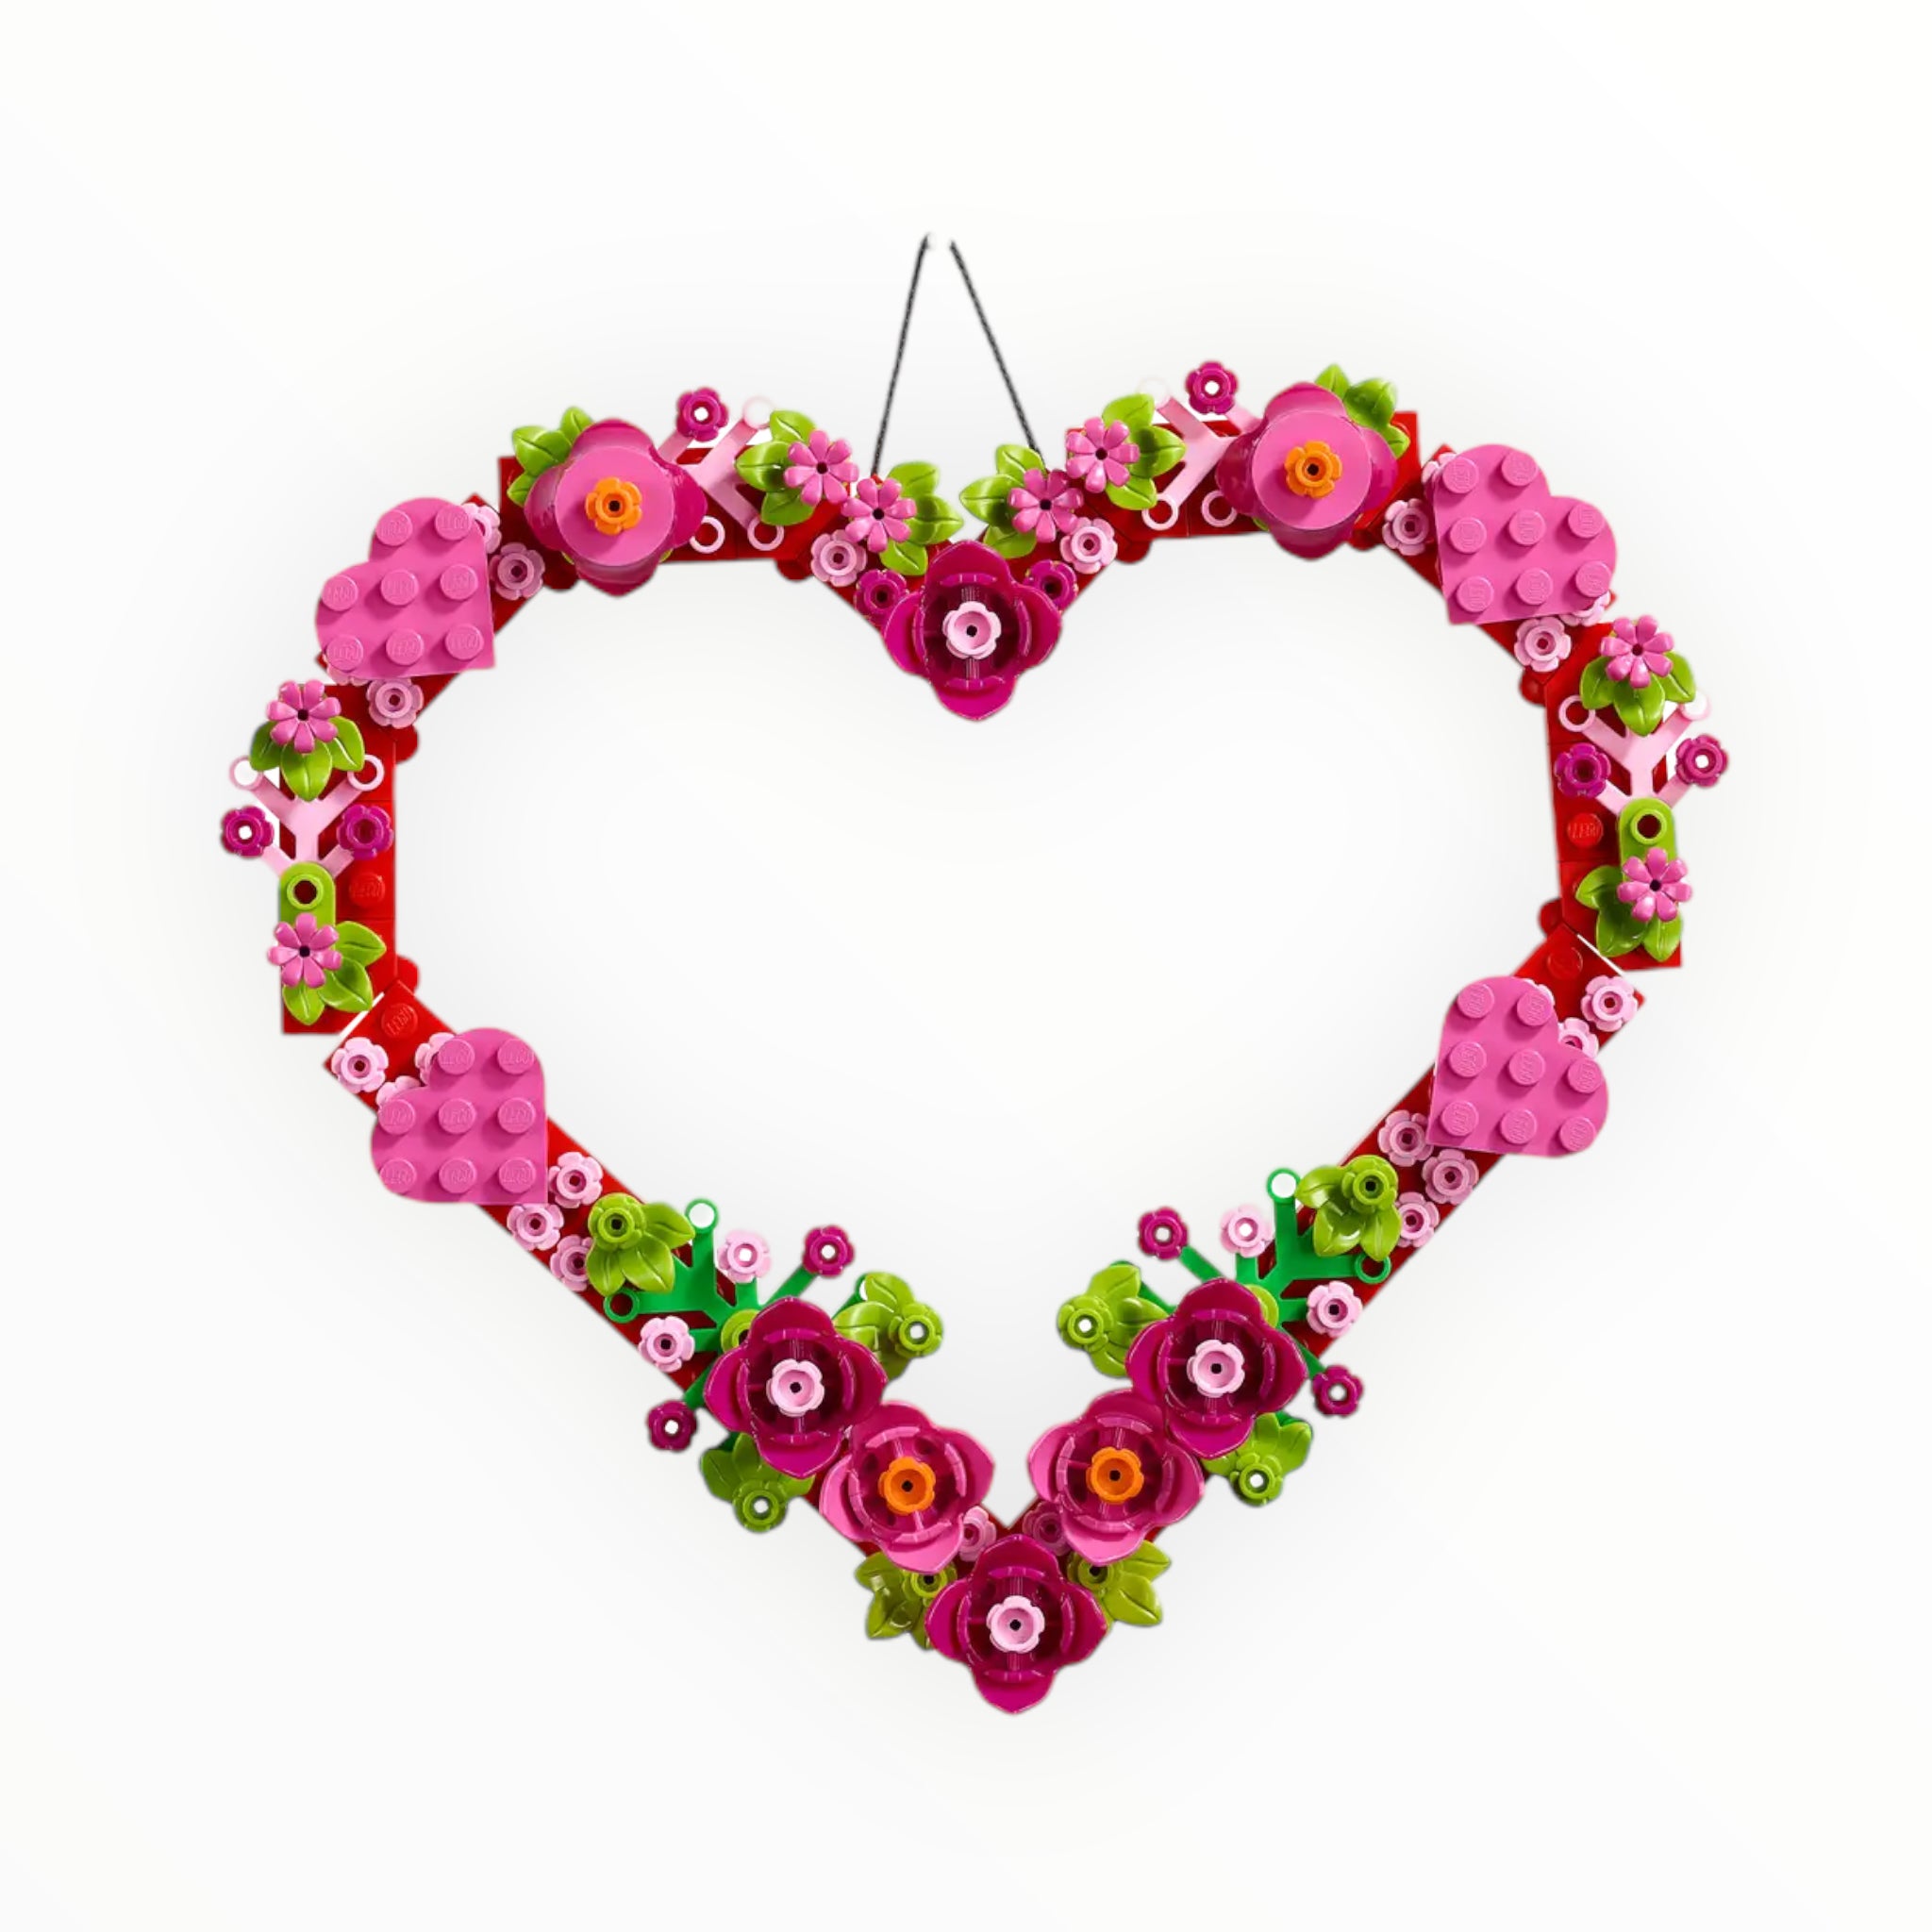 40638 LEGO Heart Ornament